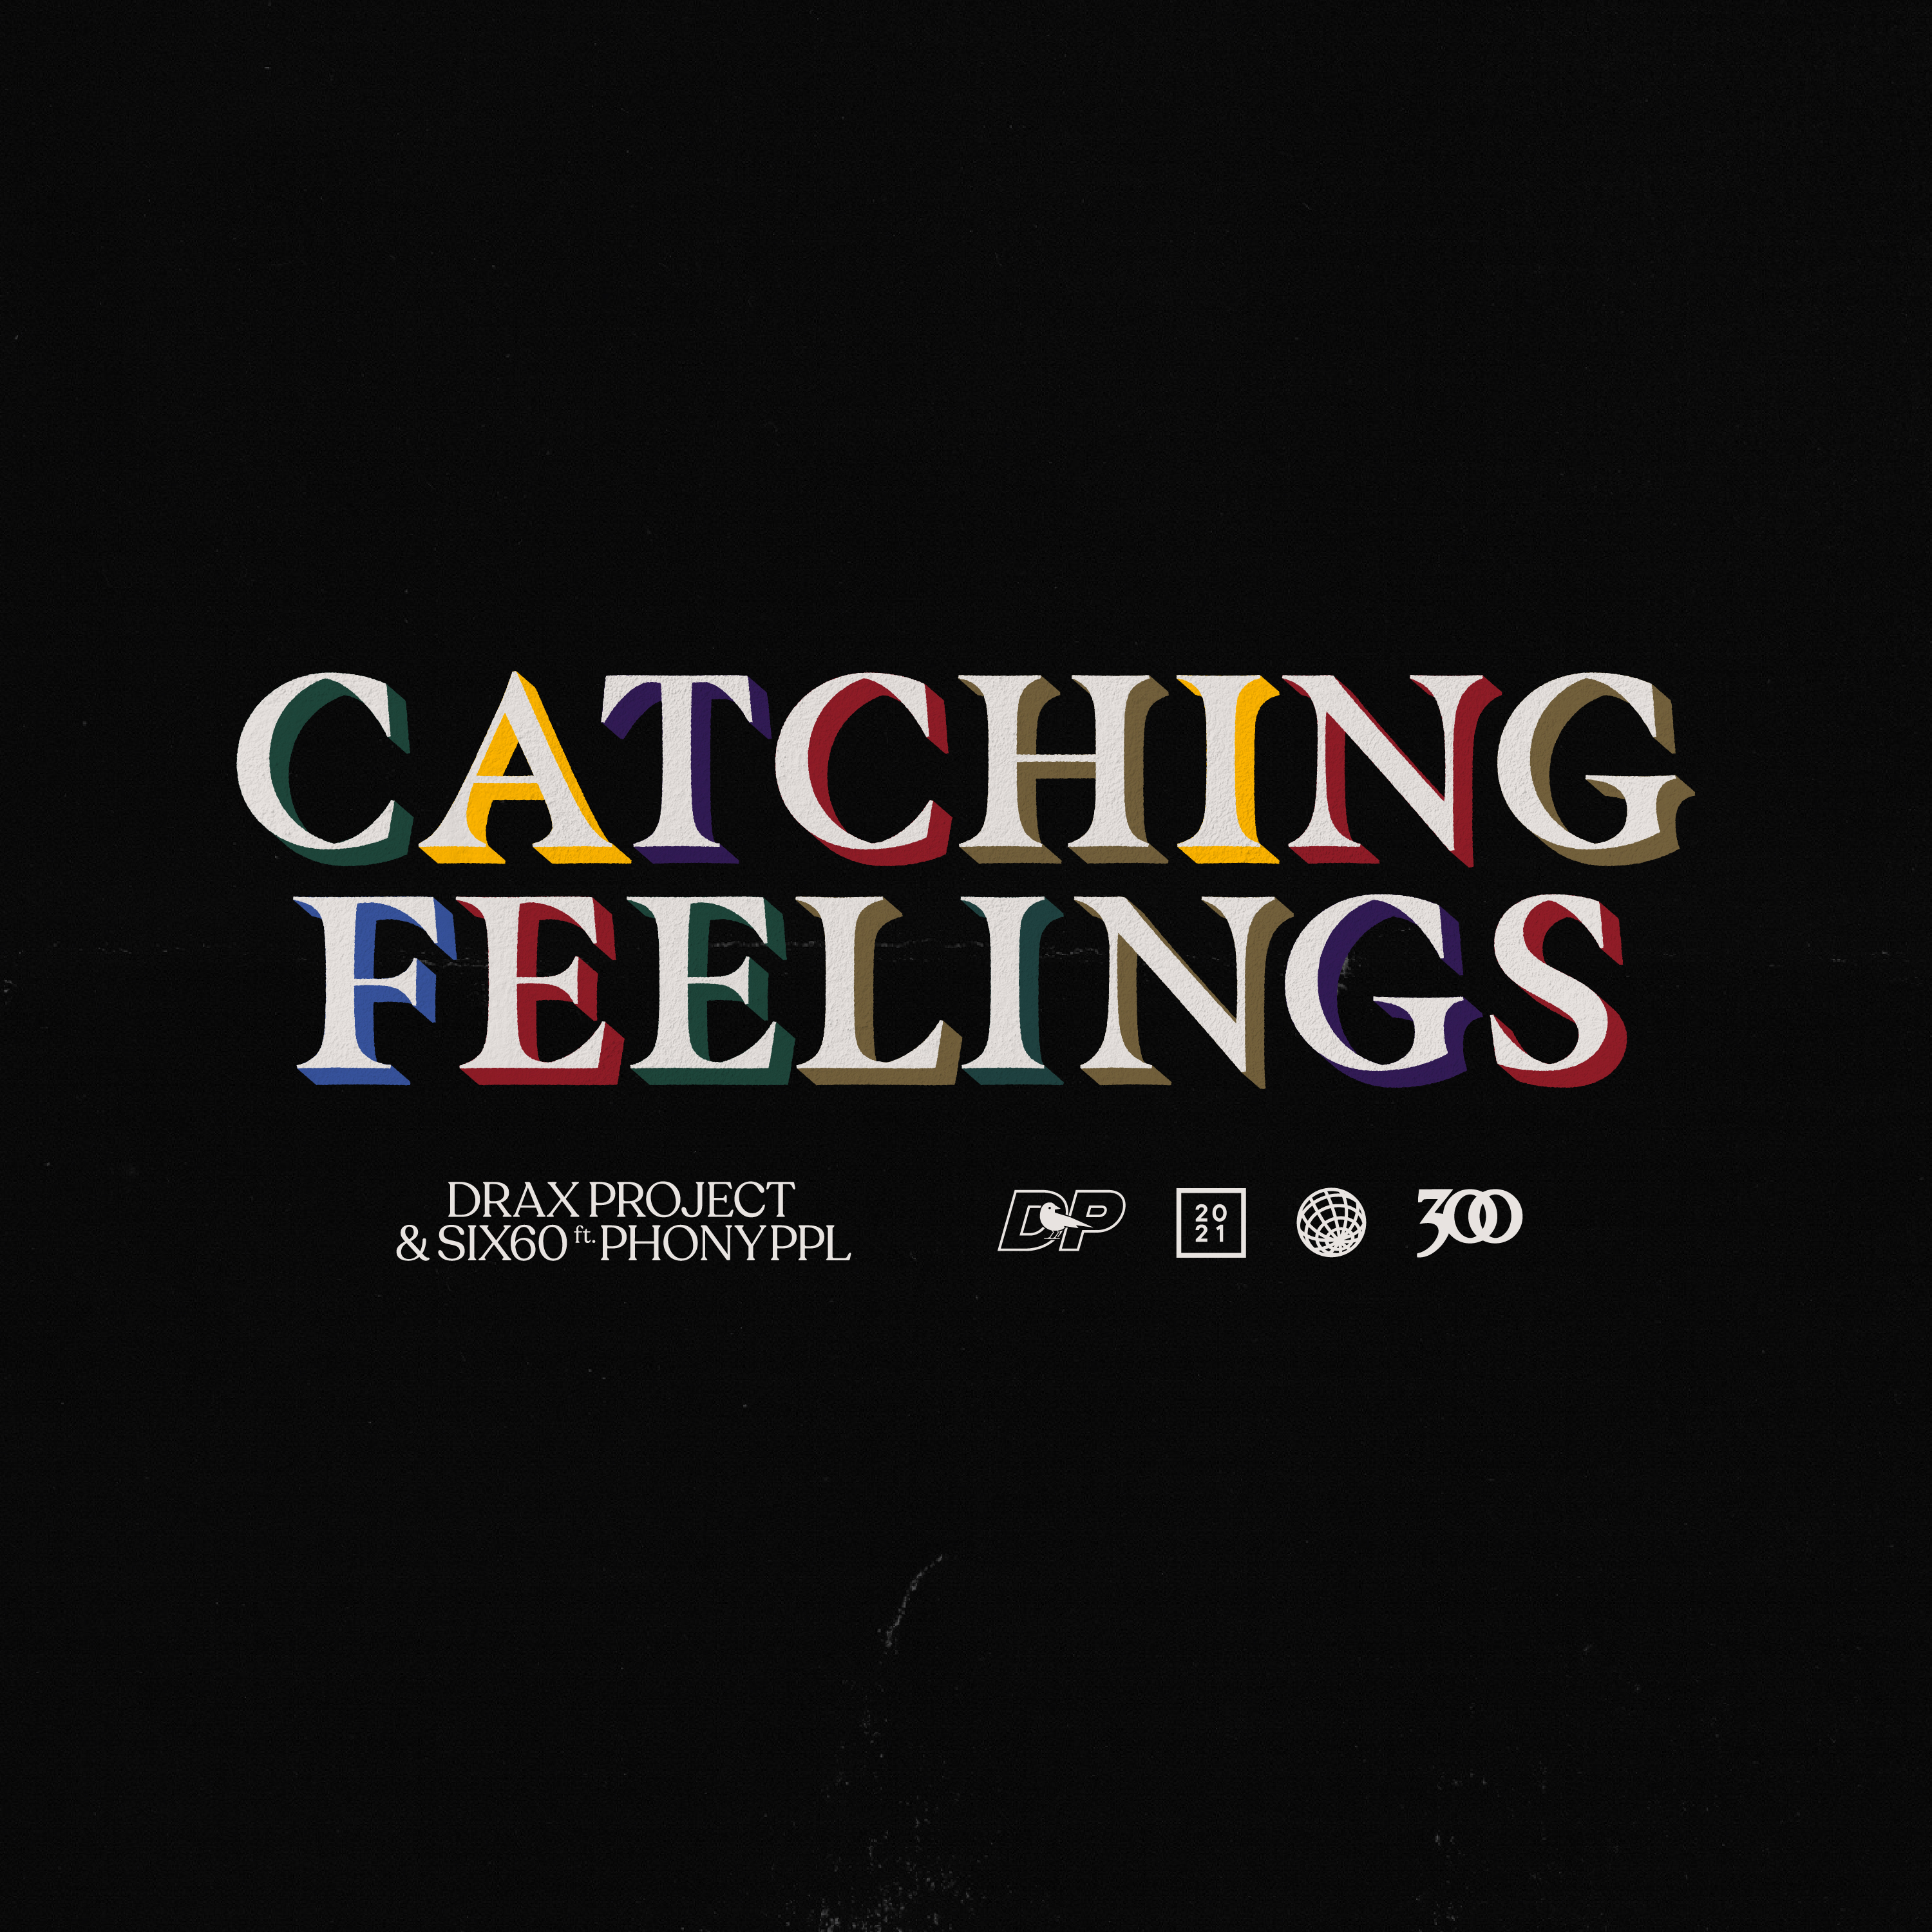 Catching Feelings' feat. SIX60